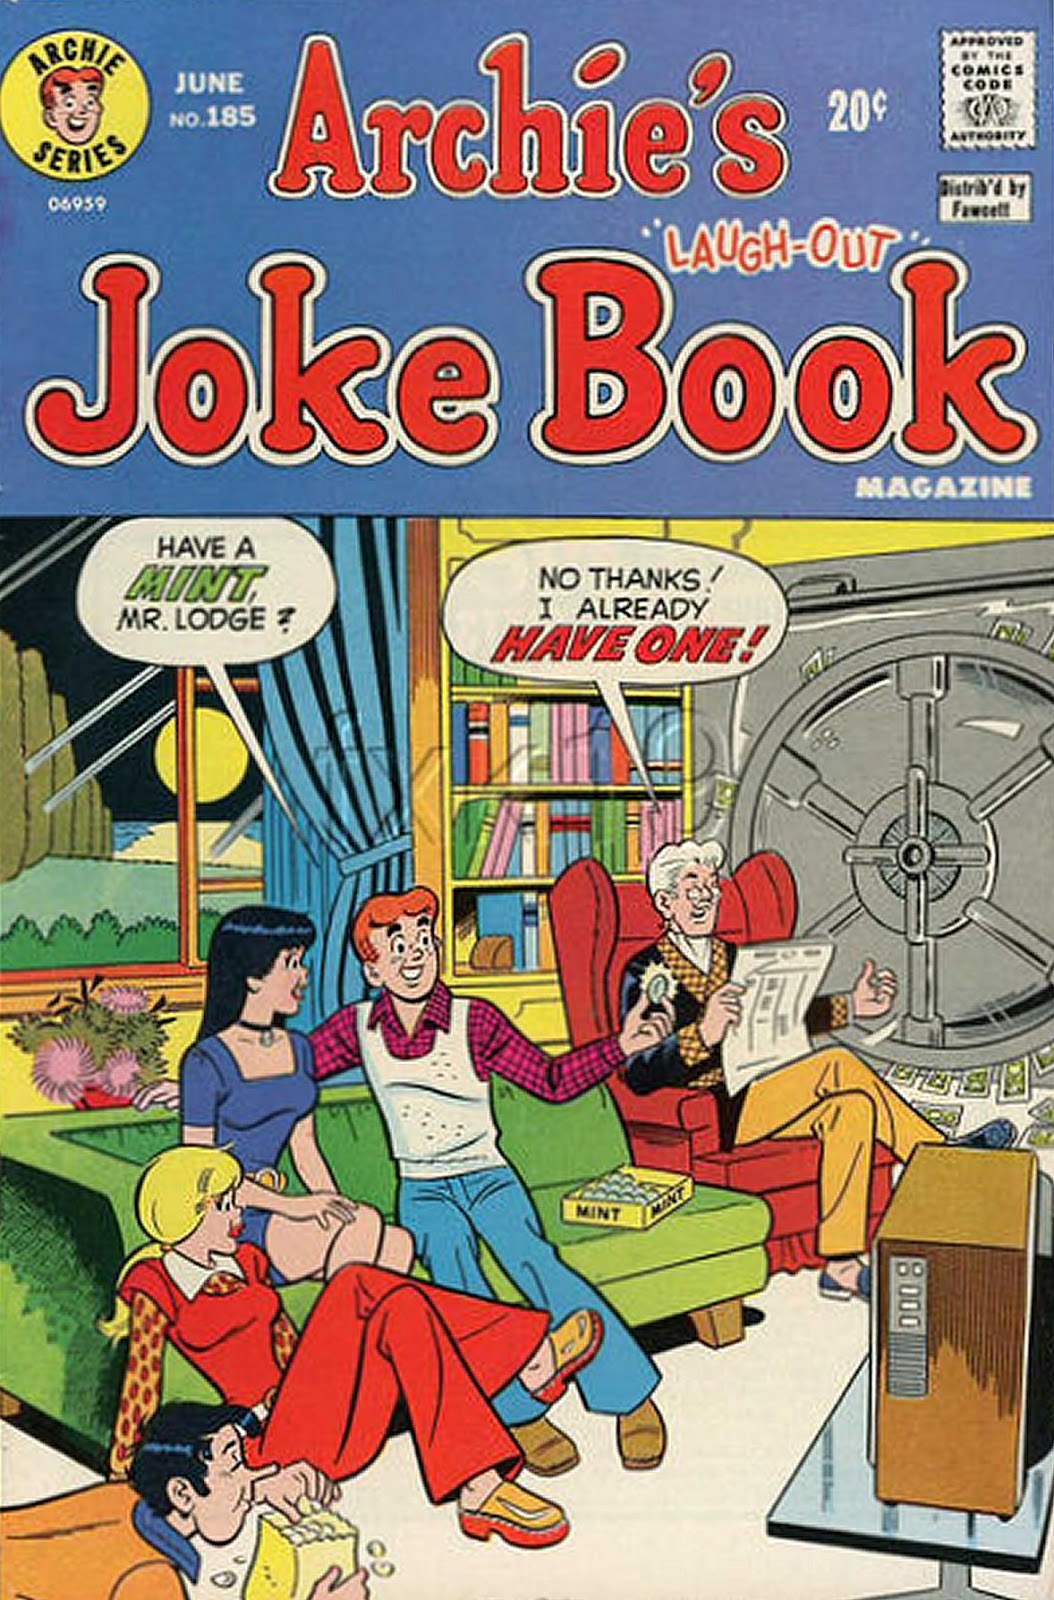 Archie's Joke Book Magazine 185 Page 1